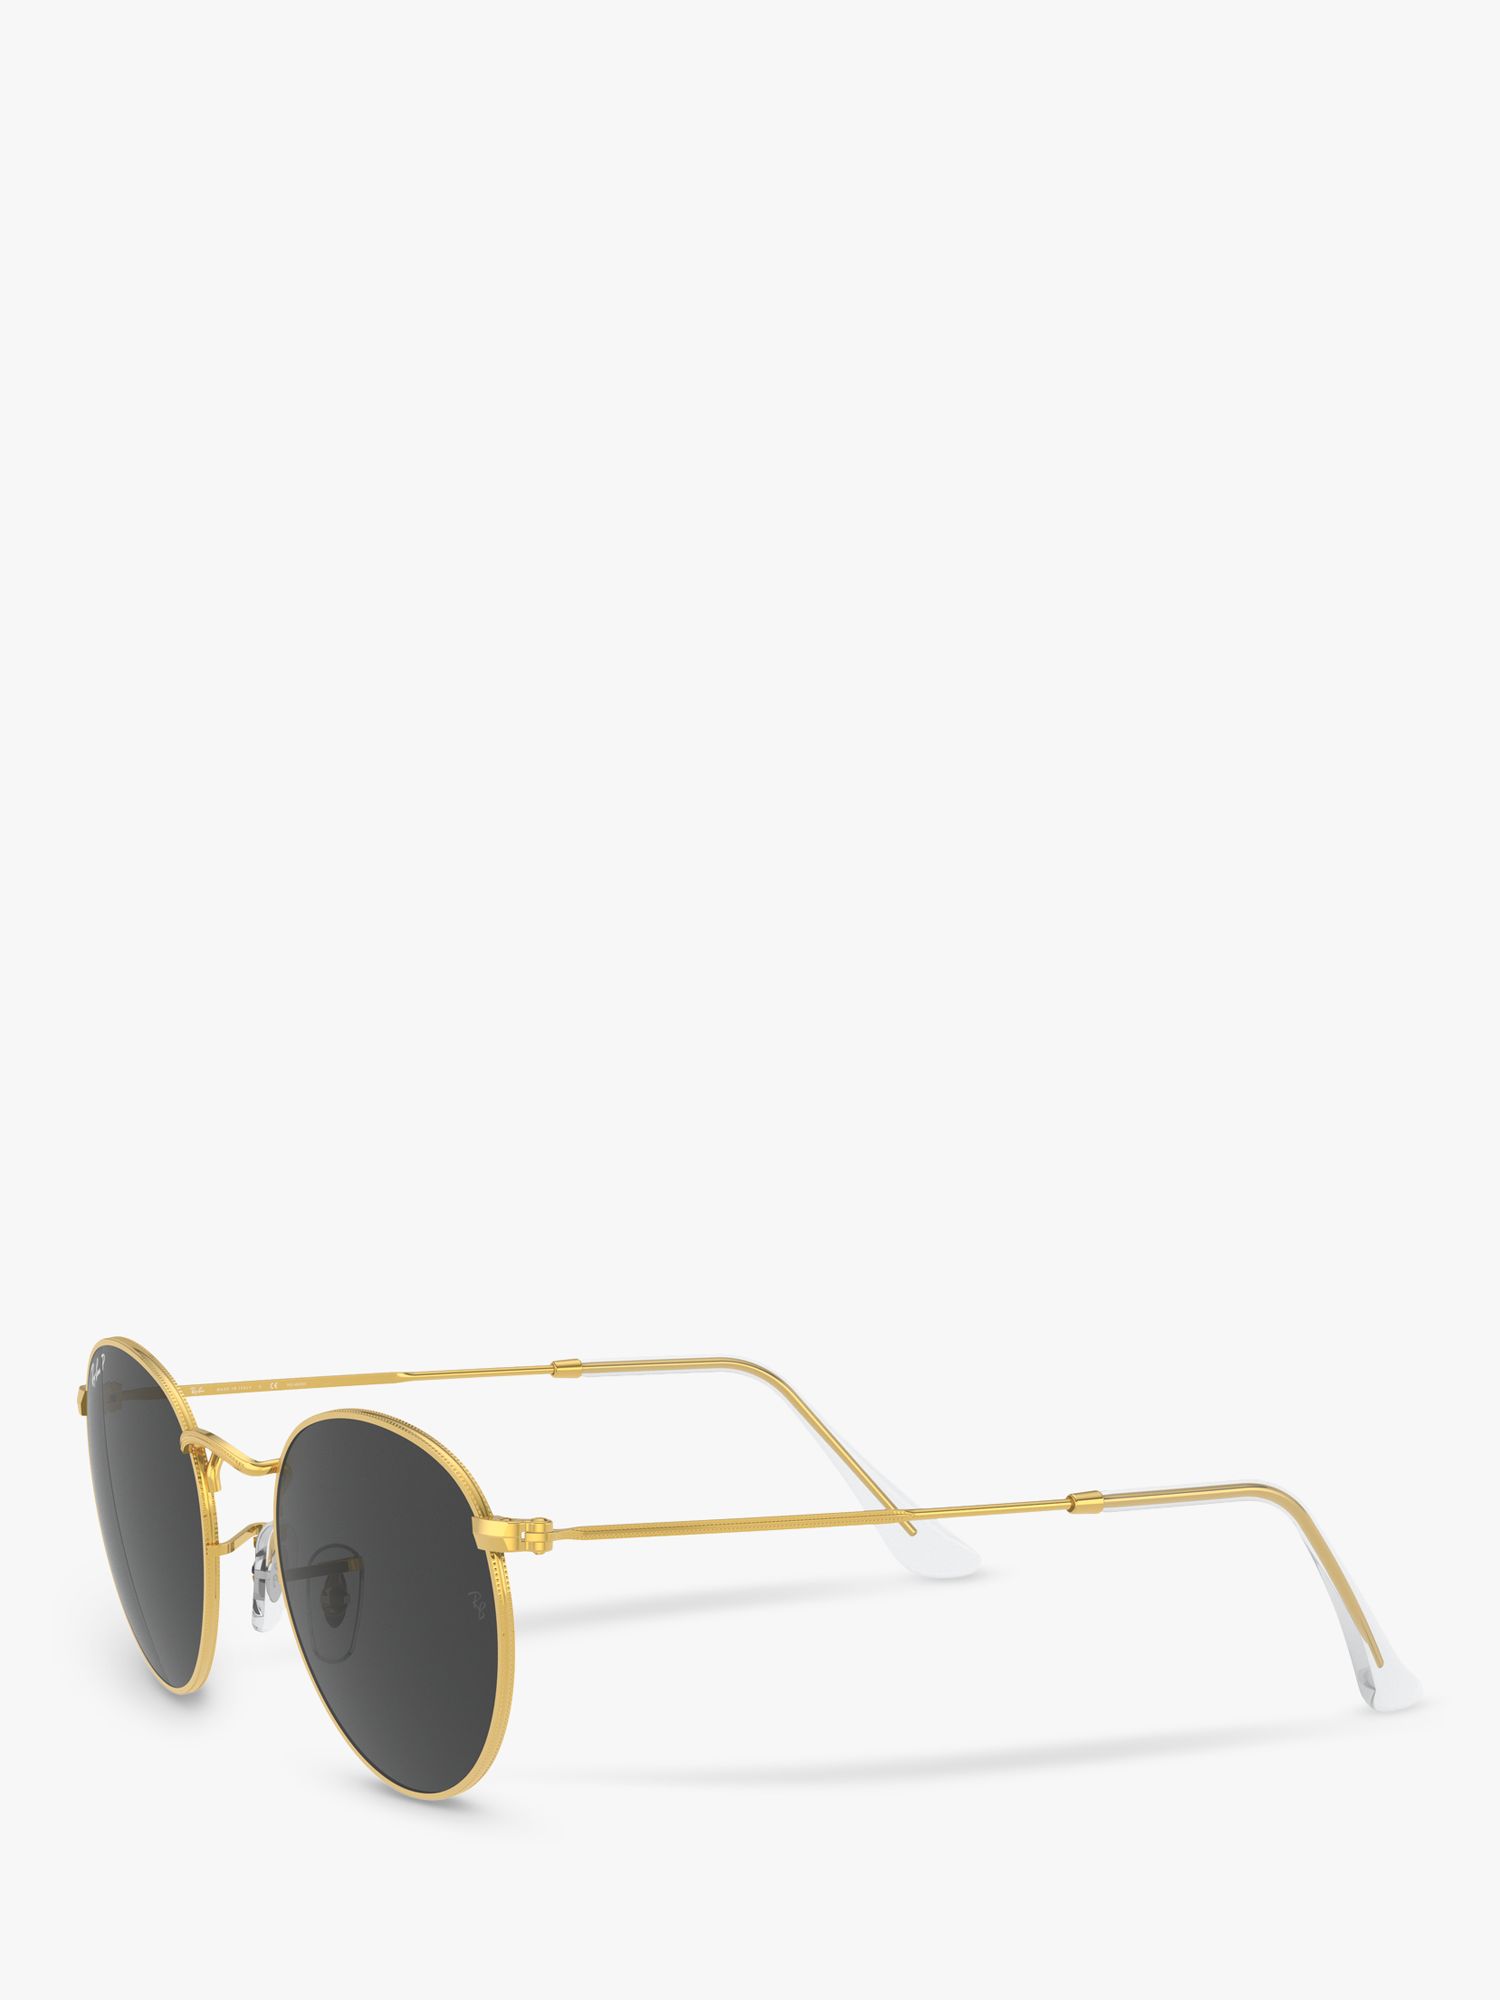 Buy Ray-Ban RB3447 Men's Polarised Round Metal Sunglasses, Gold/Black Online at johnlewis.com